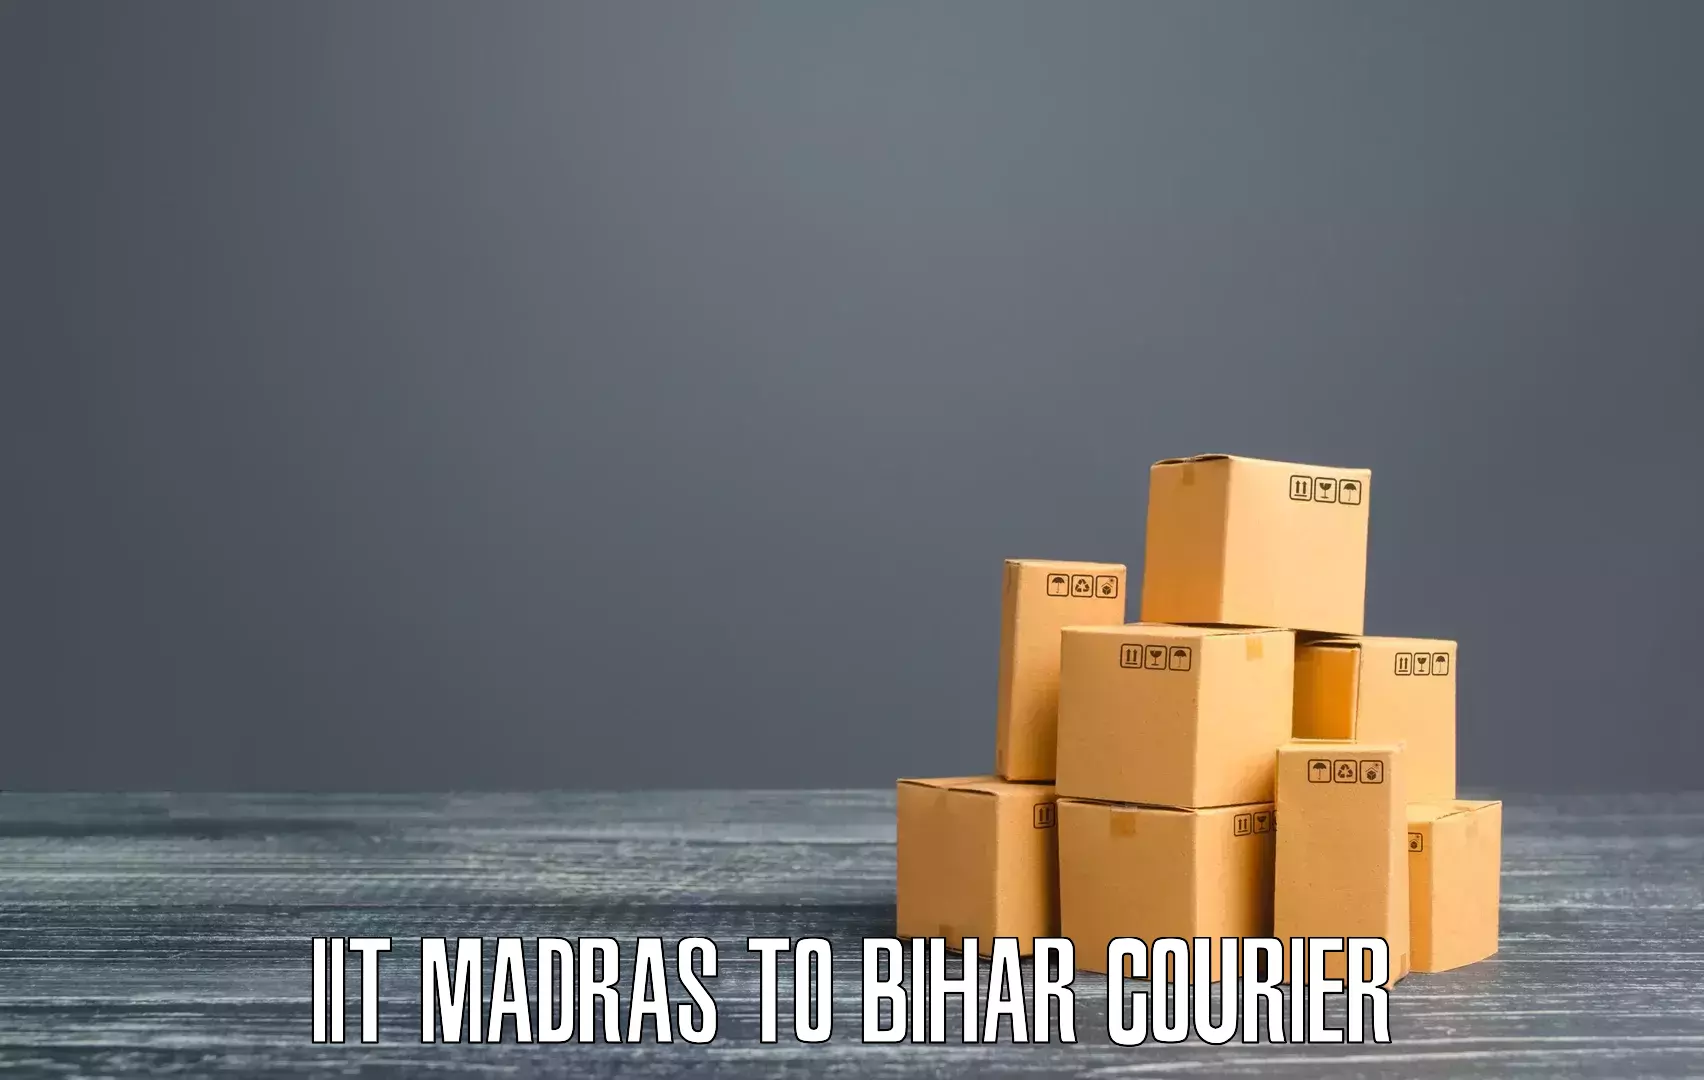 Multi-national courier services IIT Madras to Malmaliya